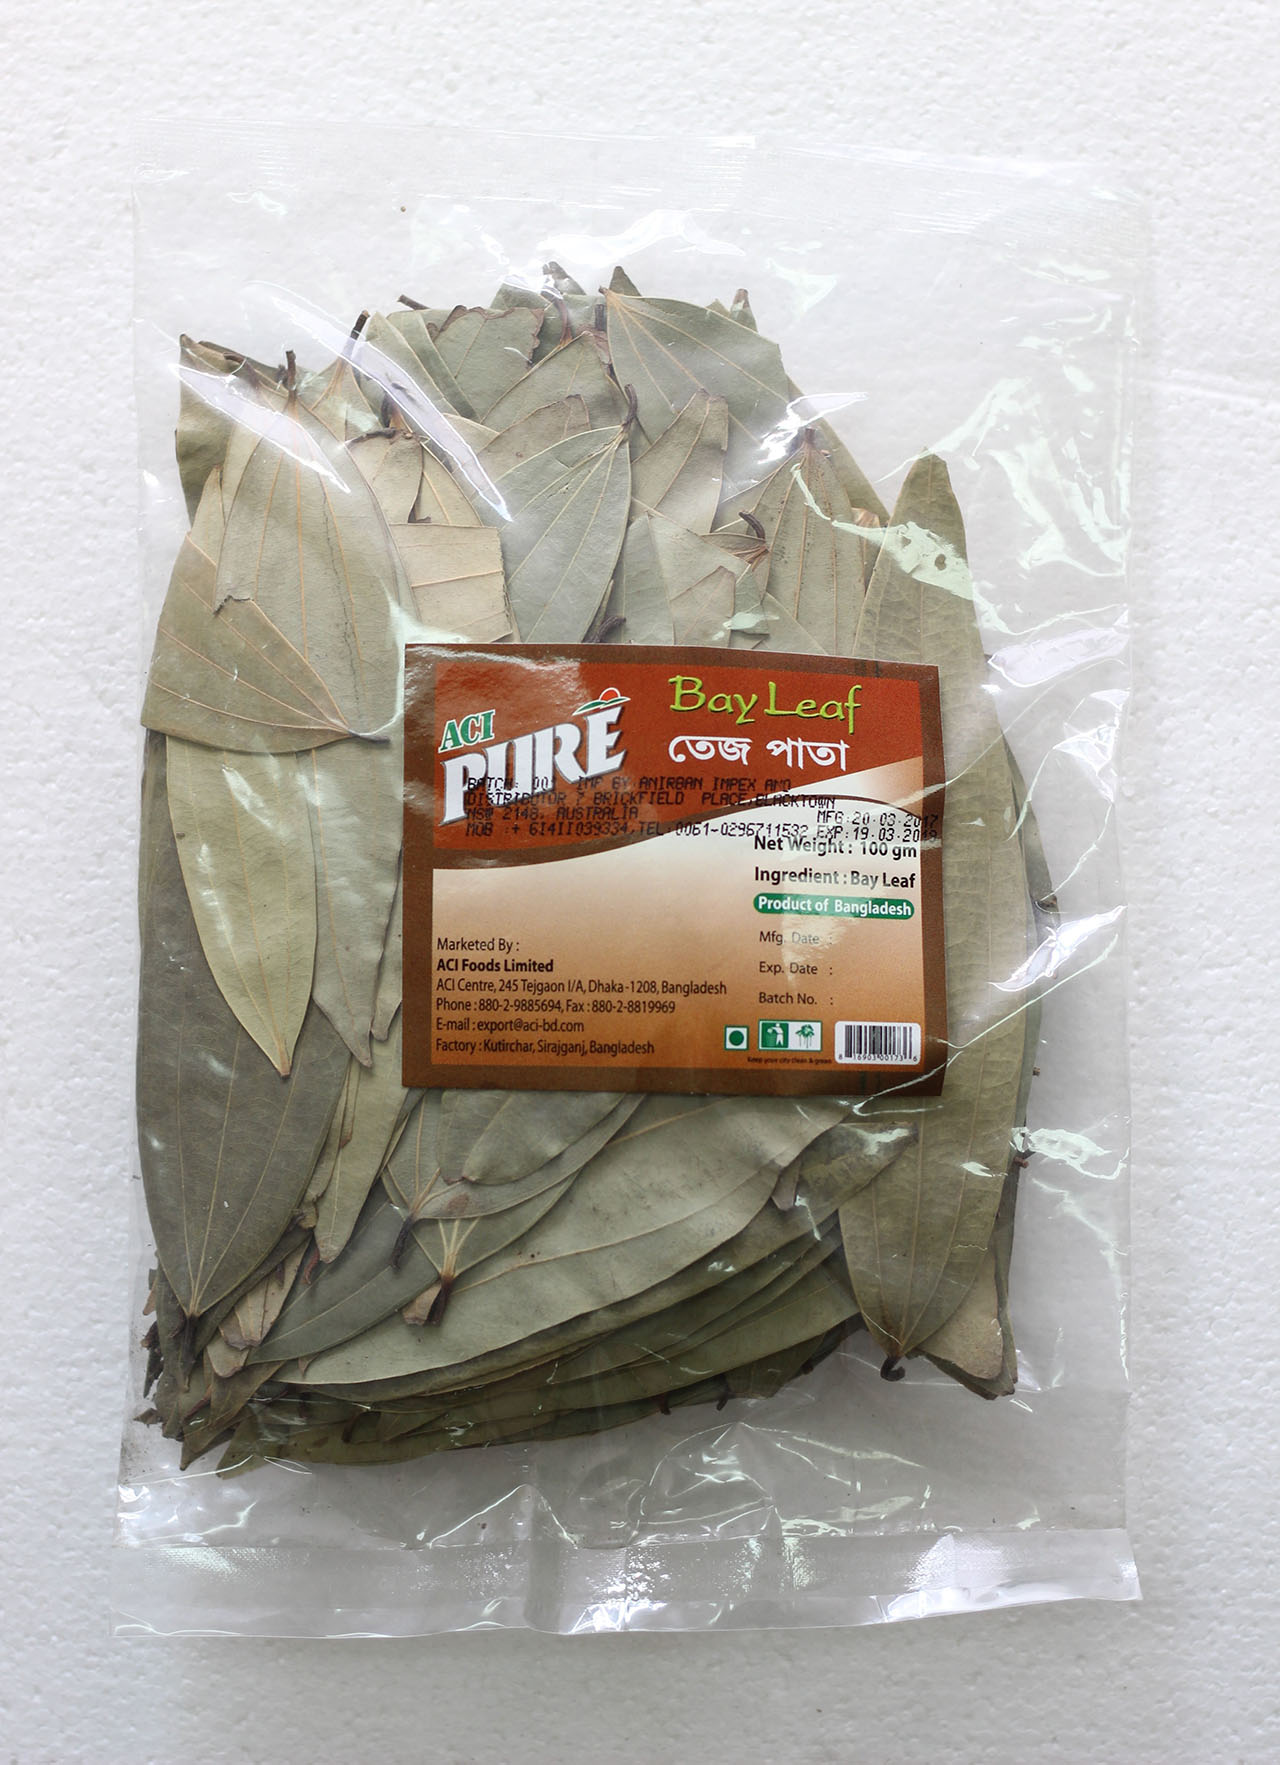 ACI Pure Bay Leaf – Tej Pata (100g)